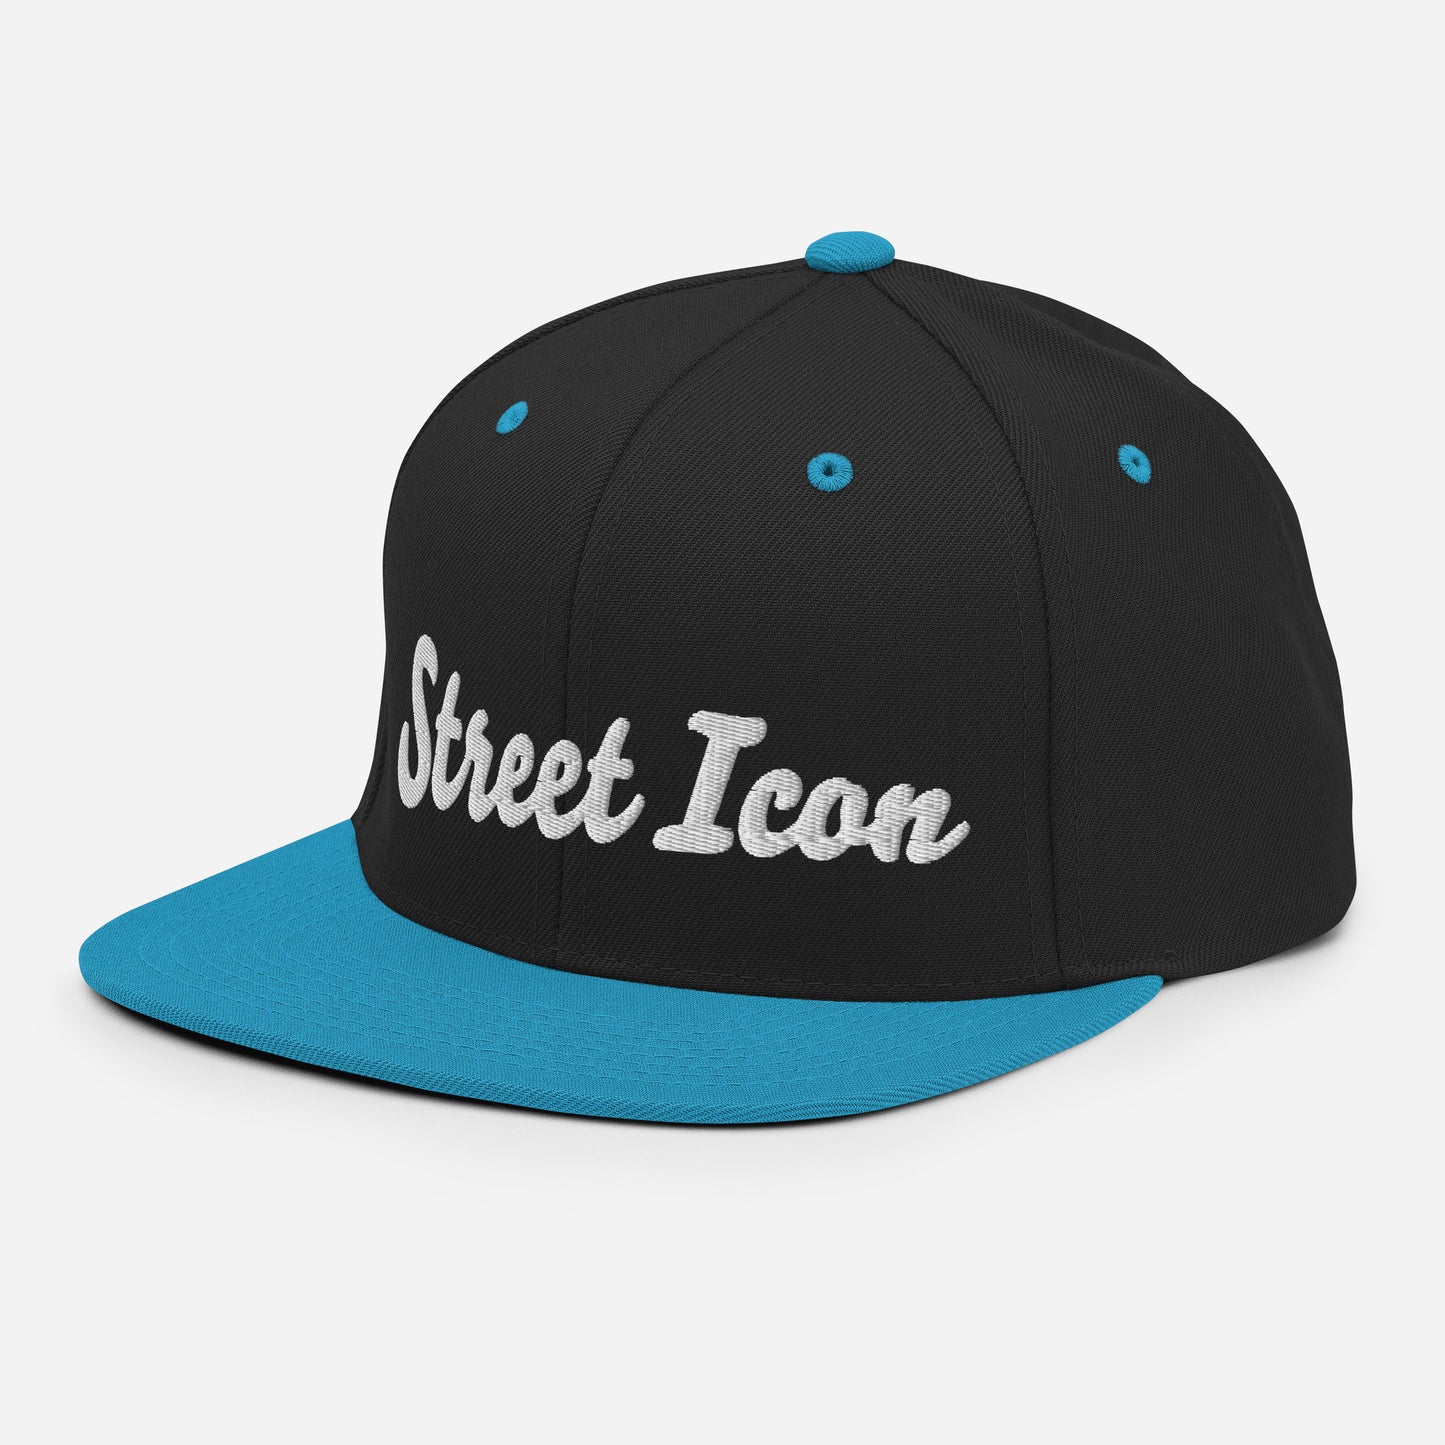 Street Icon - Basics - Snapback-Cap